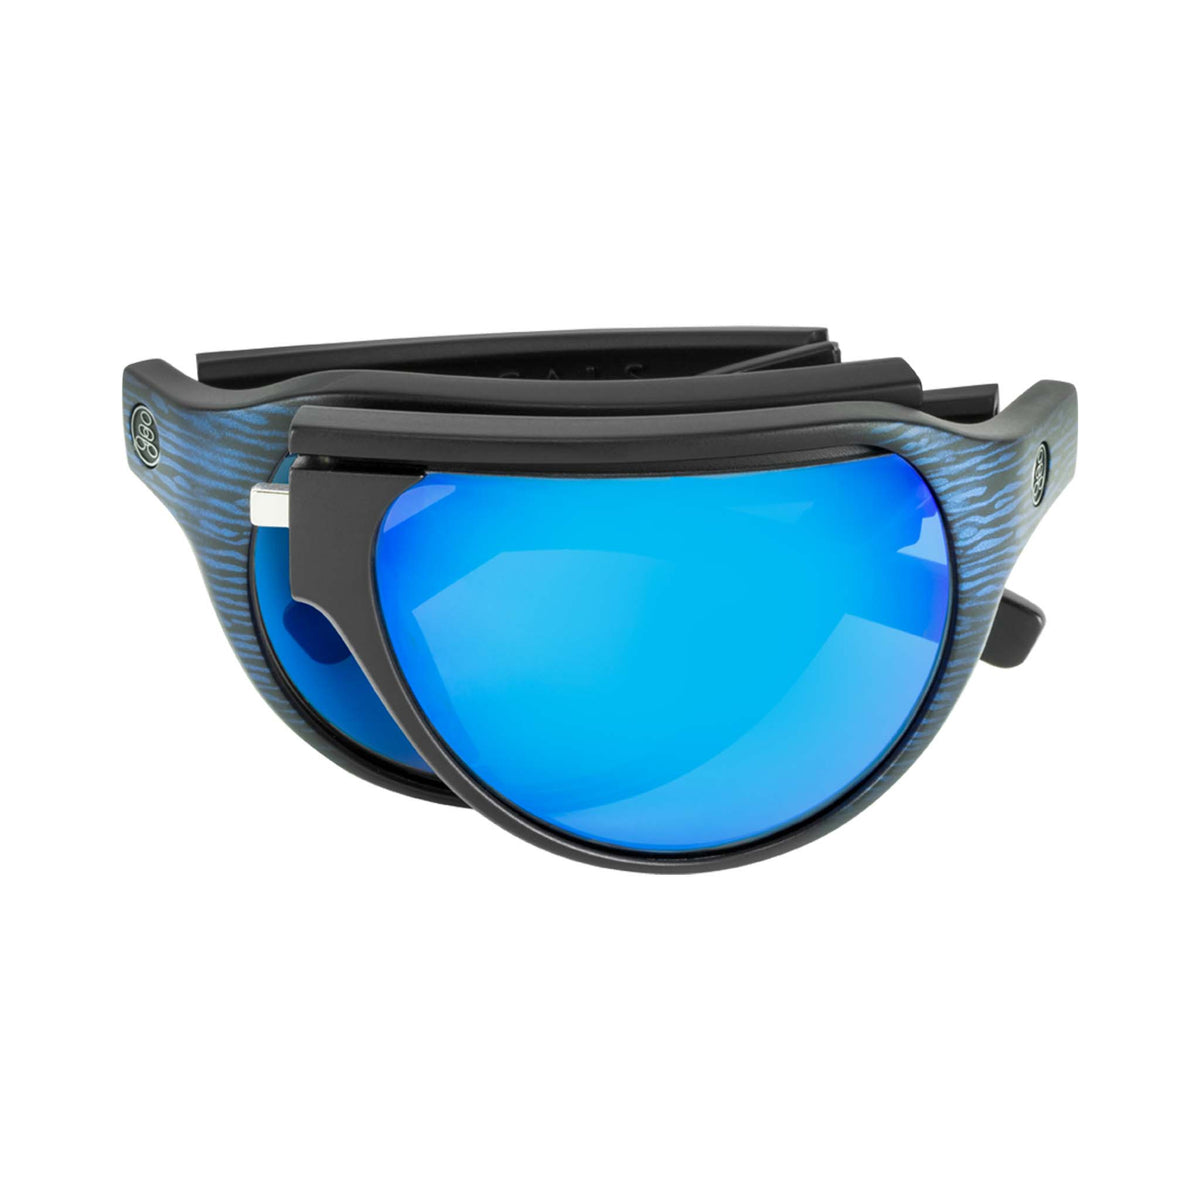 Popticals, Premium Compact Sunglasses, PopAir, 300010-EUUN, Polarized Sunglasses, Matte Blue/Black Wood Grain Frame, Blue Mirror Lenses, Compact View